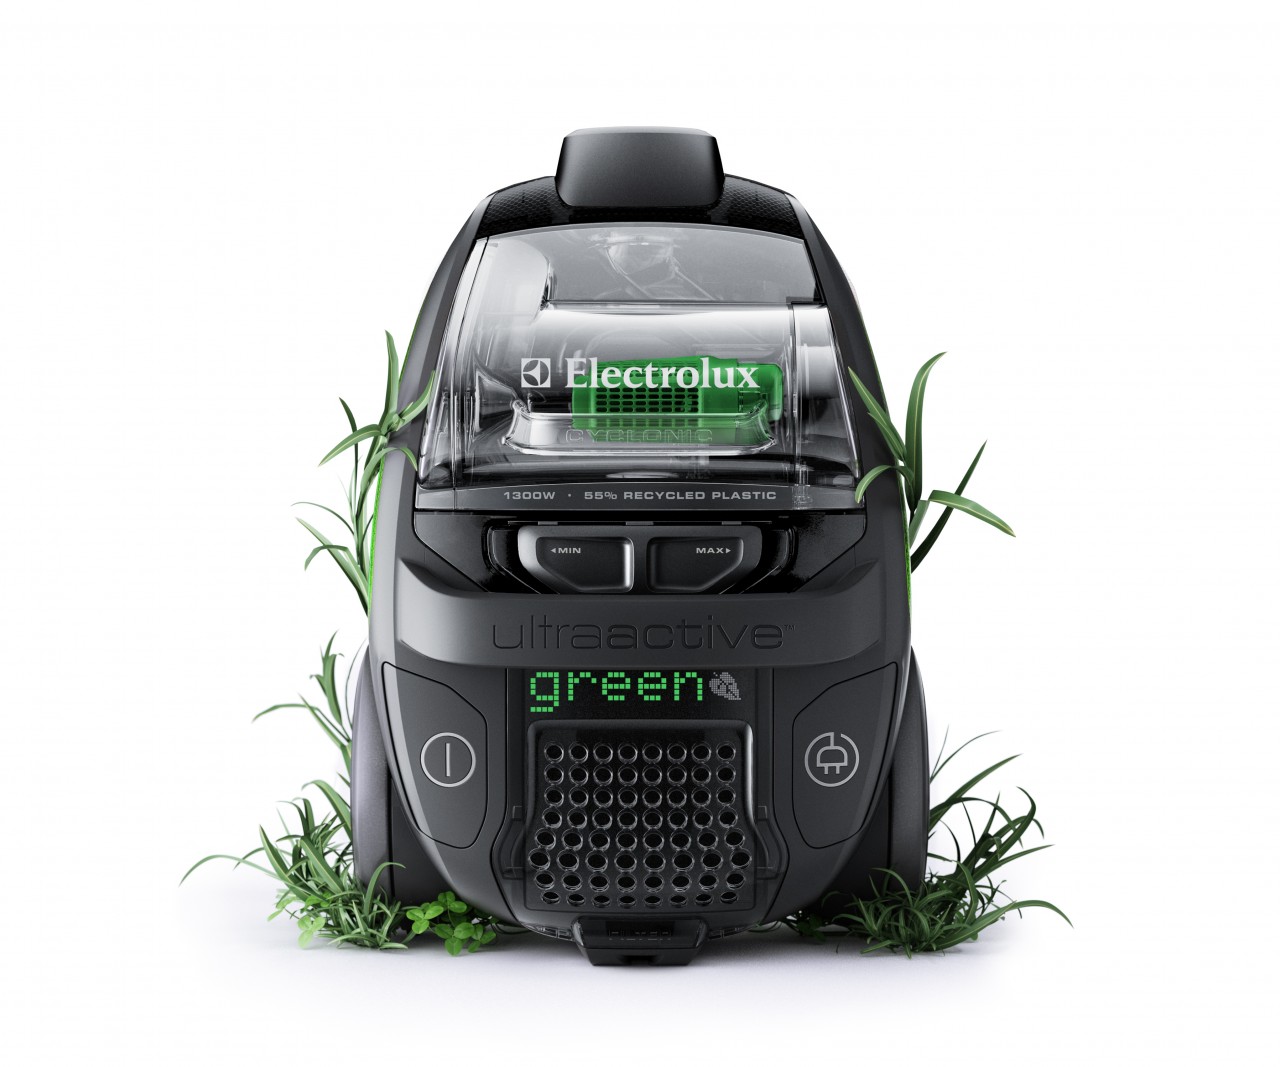 Electrolux Ultra active vacuum cleaner design presentation klöver dammsugare gräs växter blad